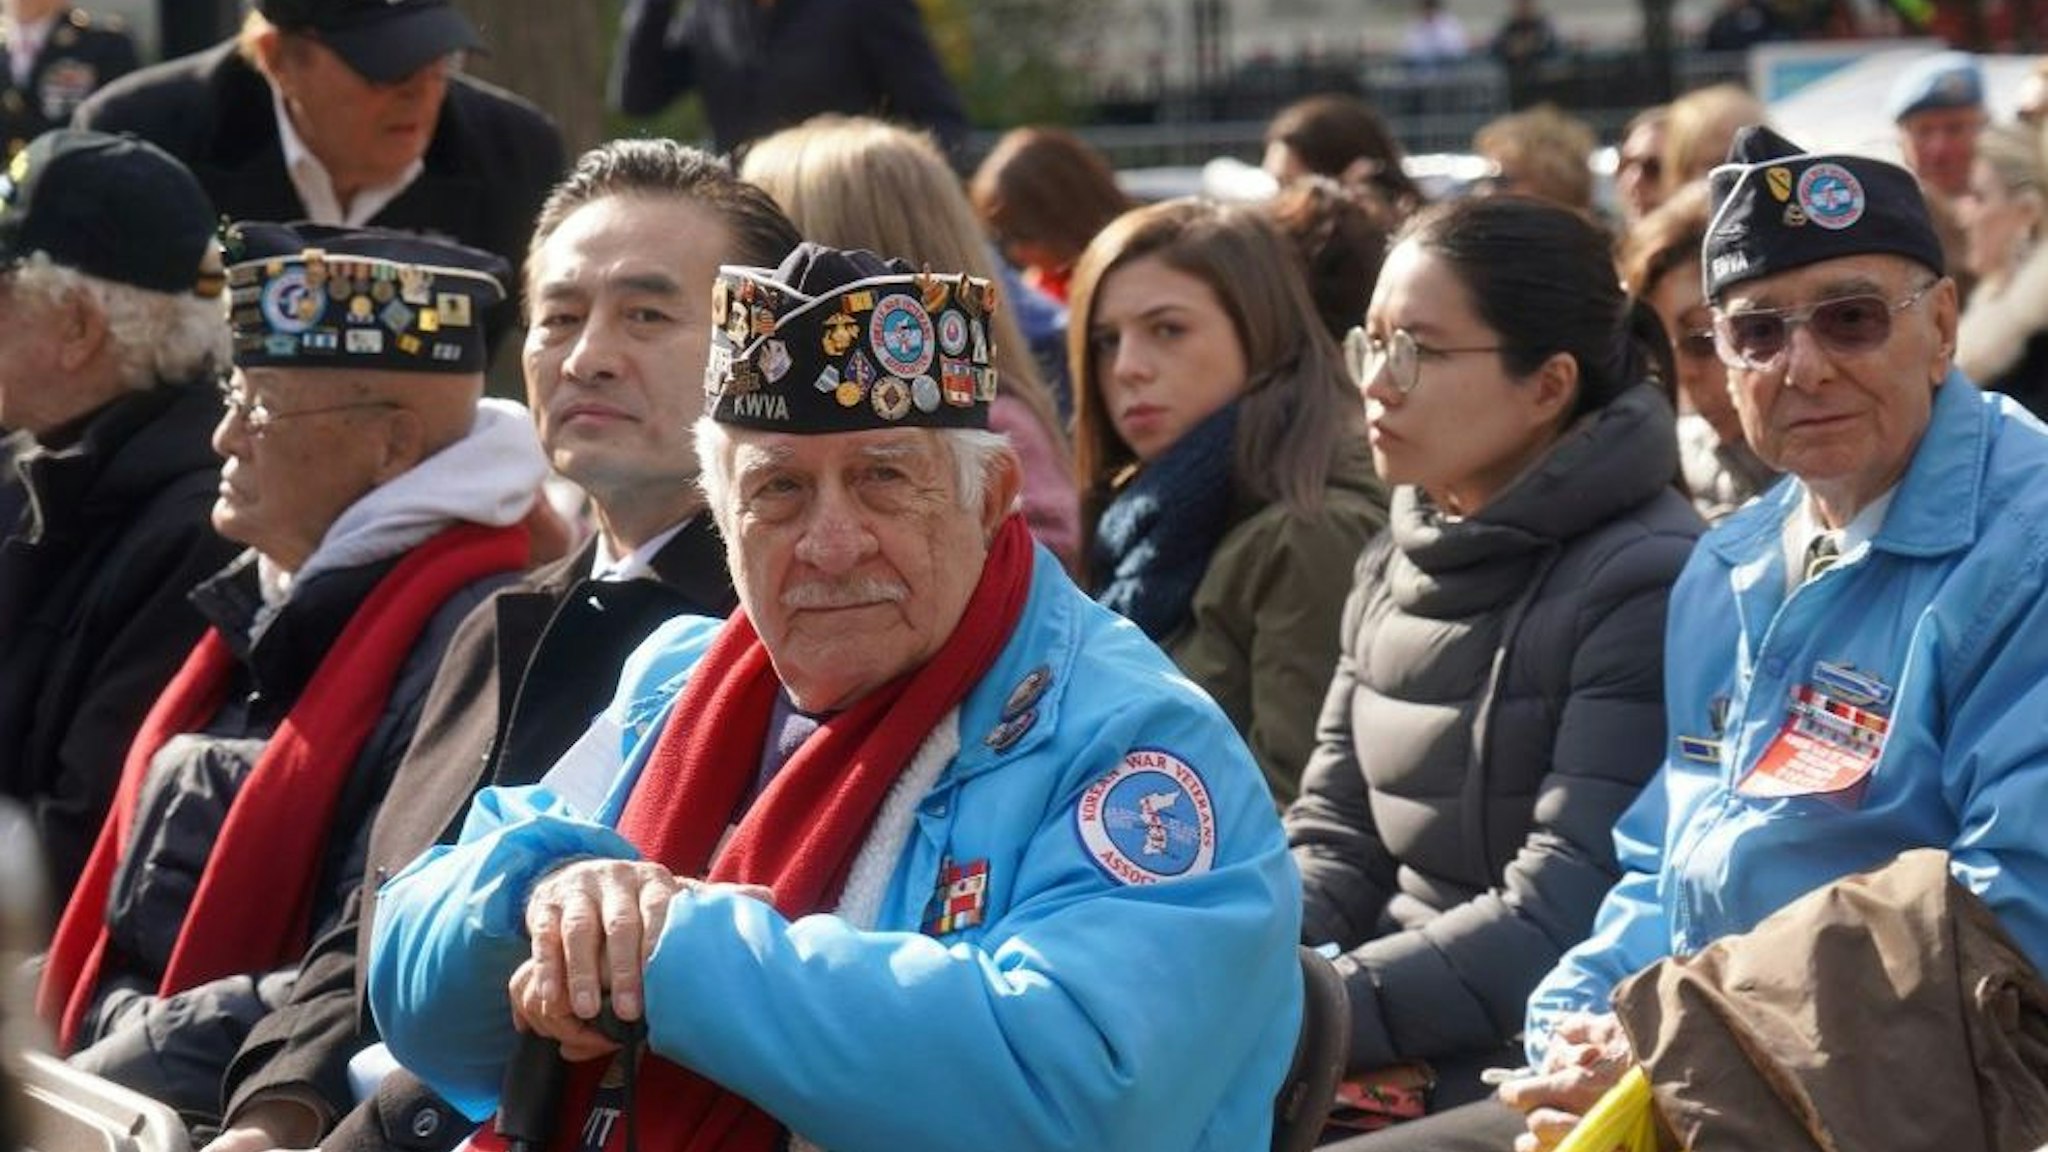 U.S. Veterans attend the Veterans Day Parade on November 11, 2019 in New York City.